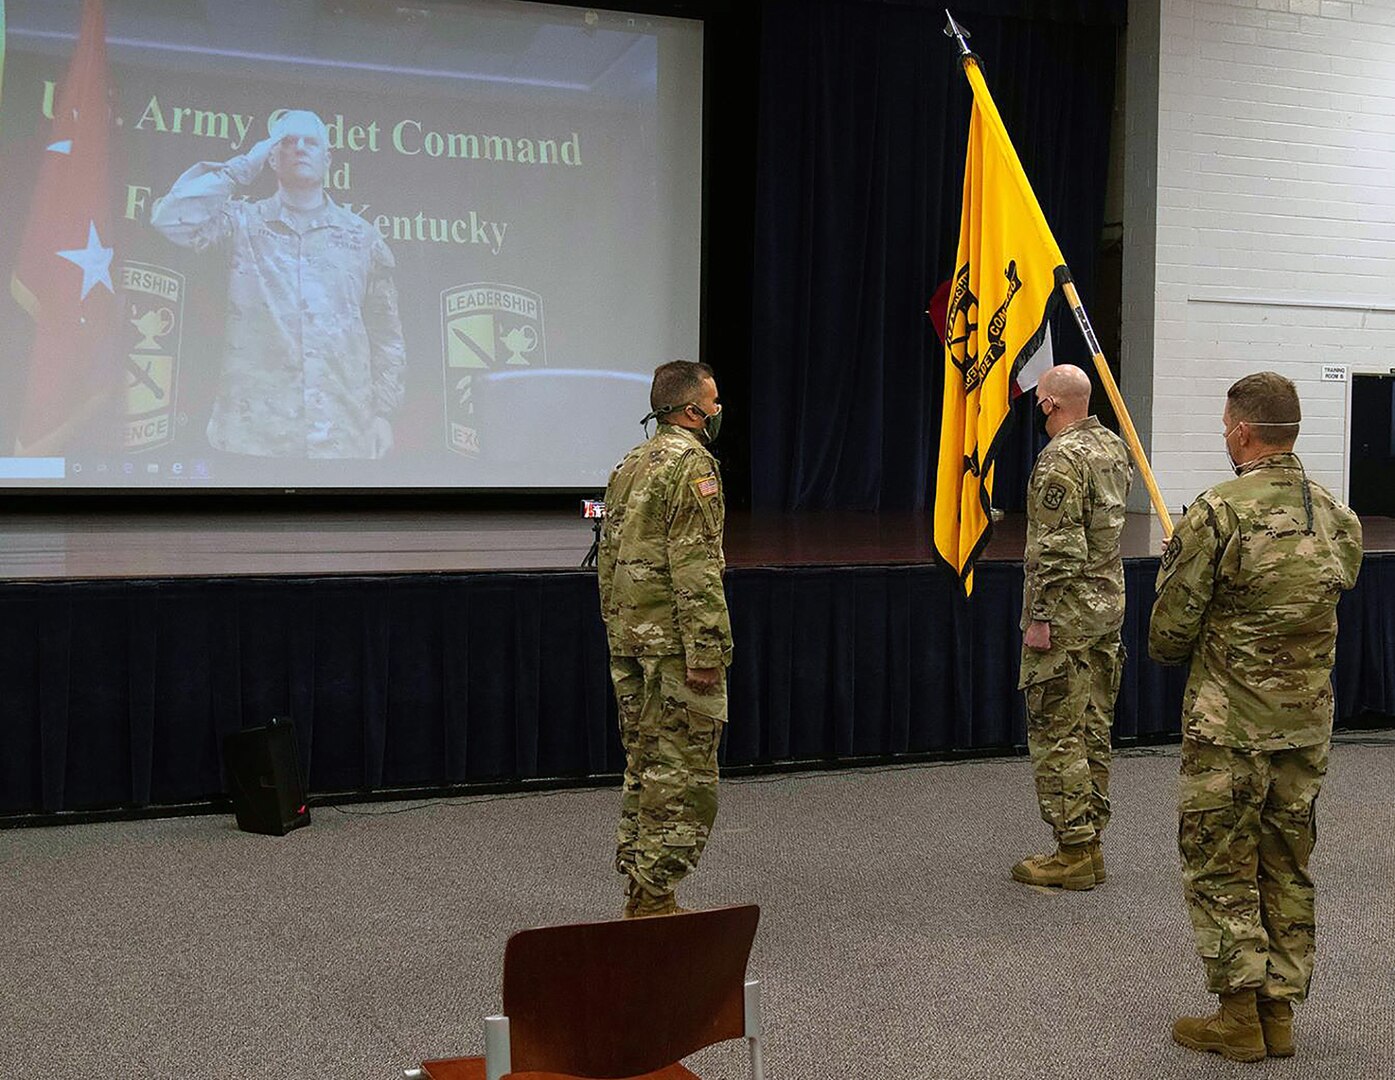 Col. Chris S. Alfeiri (right), departing 5th Brigade commander, salutes Maj. Gen. John R. Evans Jr. (on screen), commanding general, U.S. Army Cadet Command, while Col. Mark A. Olsen, incoming commander (left), looks on June 23.